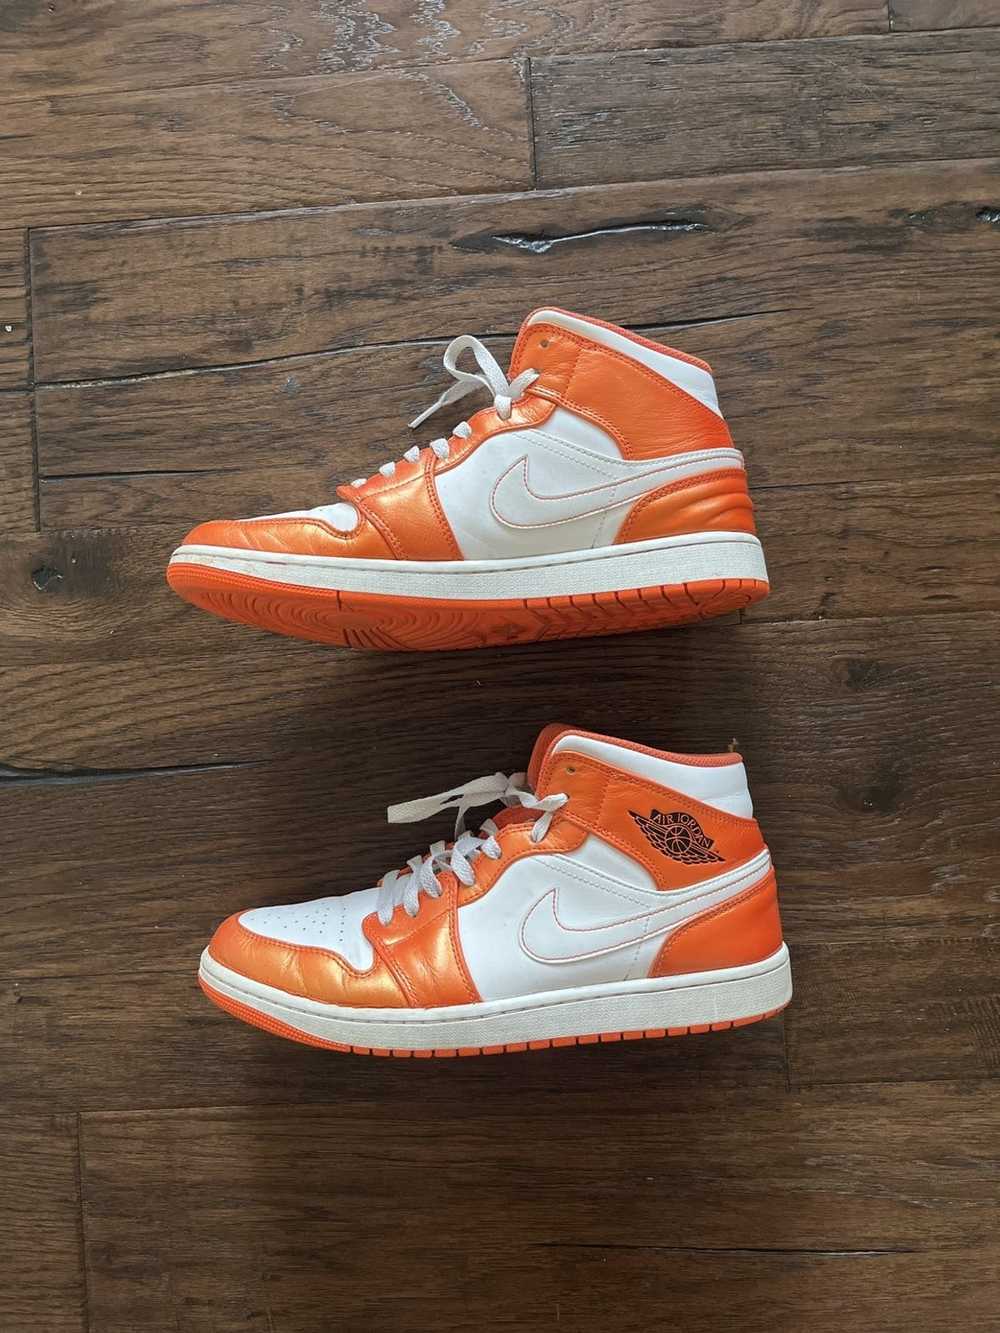 Jordan Brand × Nike Orange jordan ones - image 1